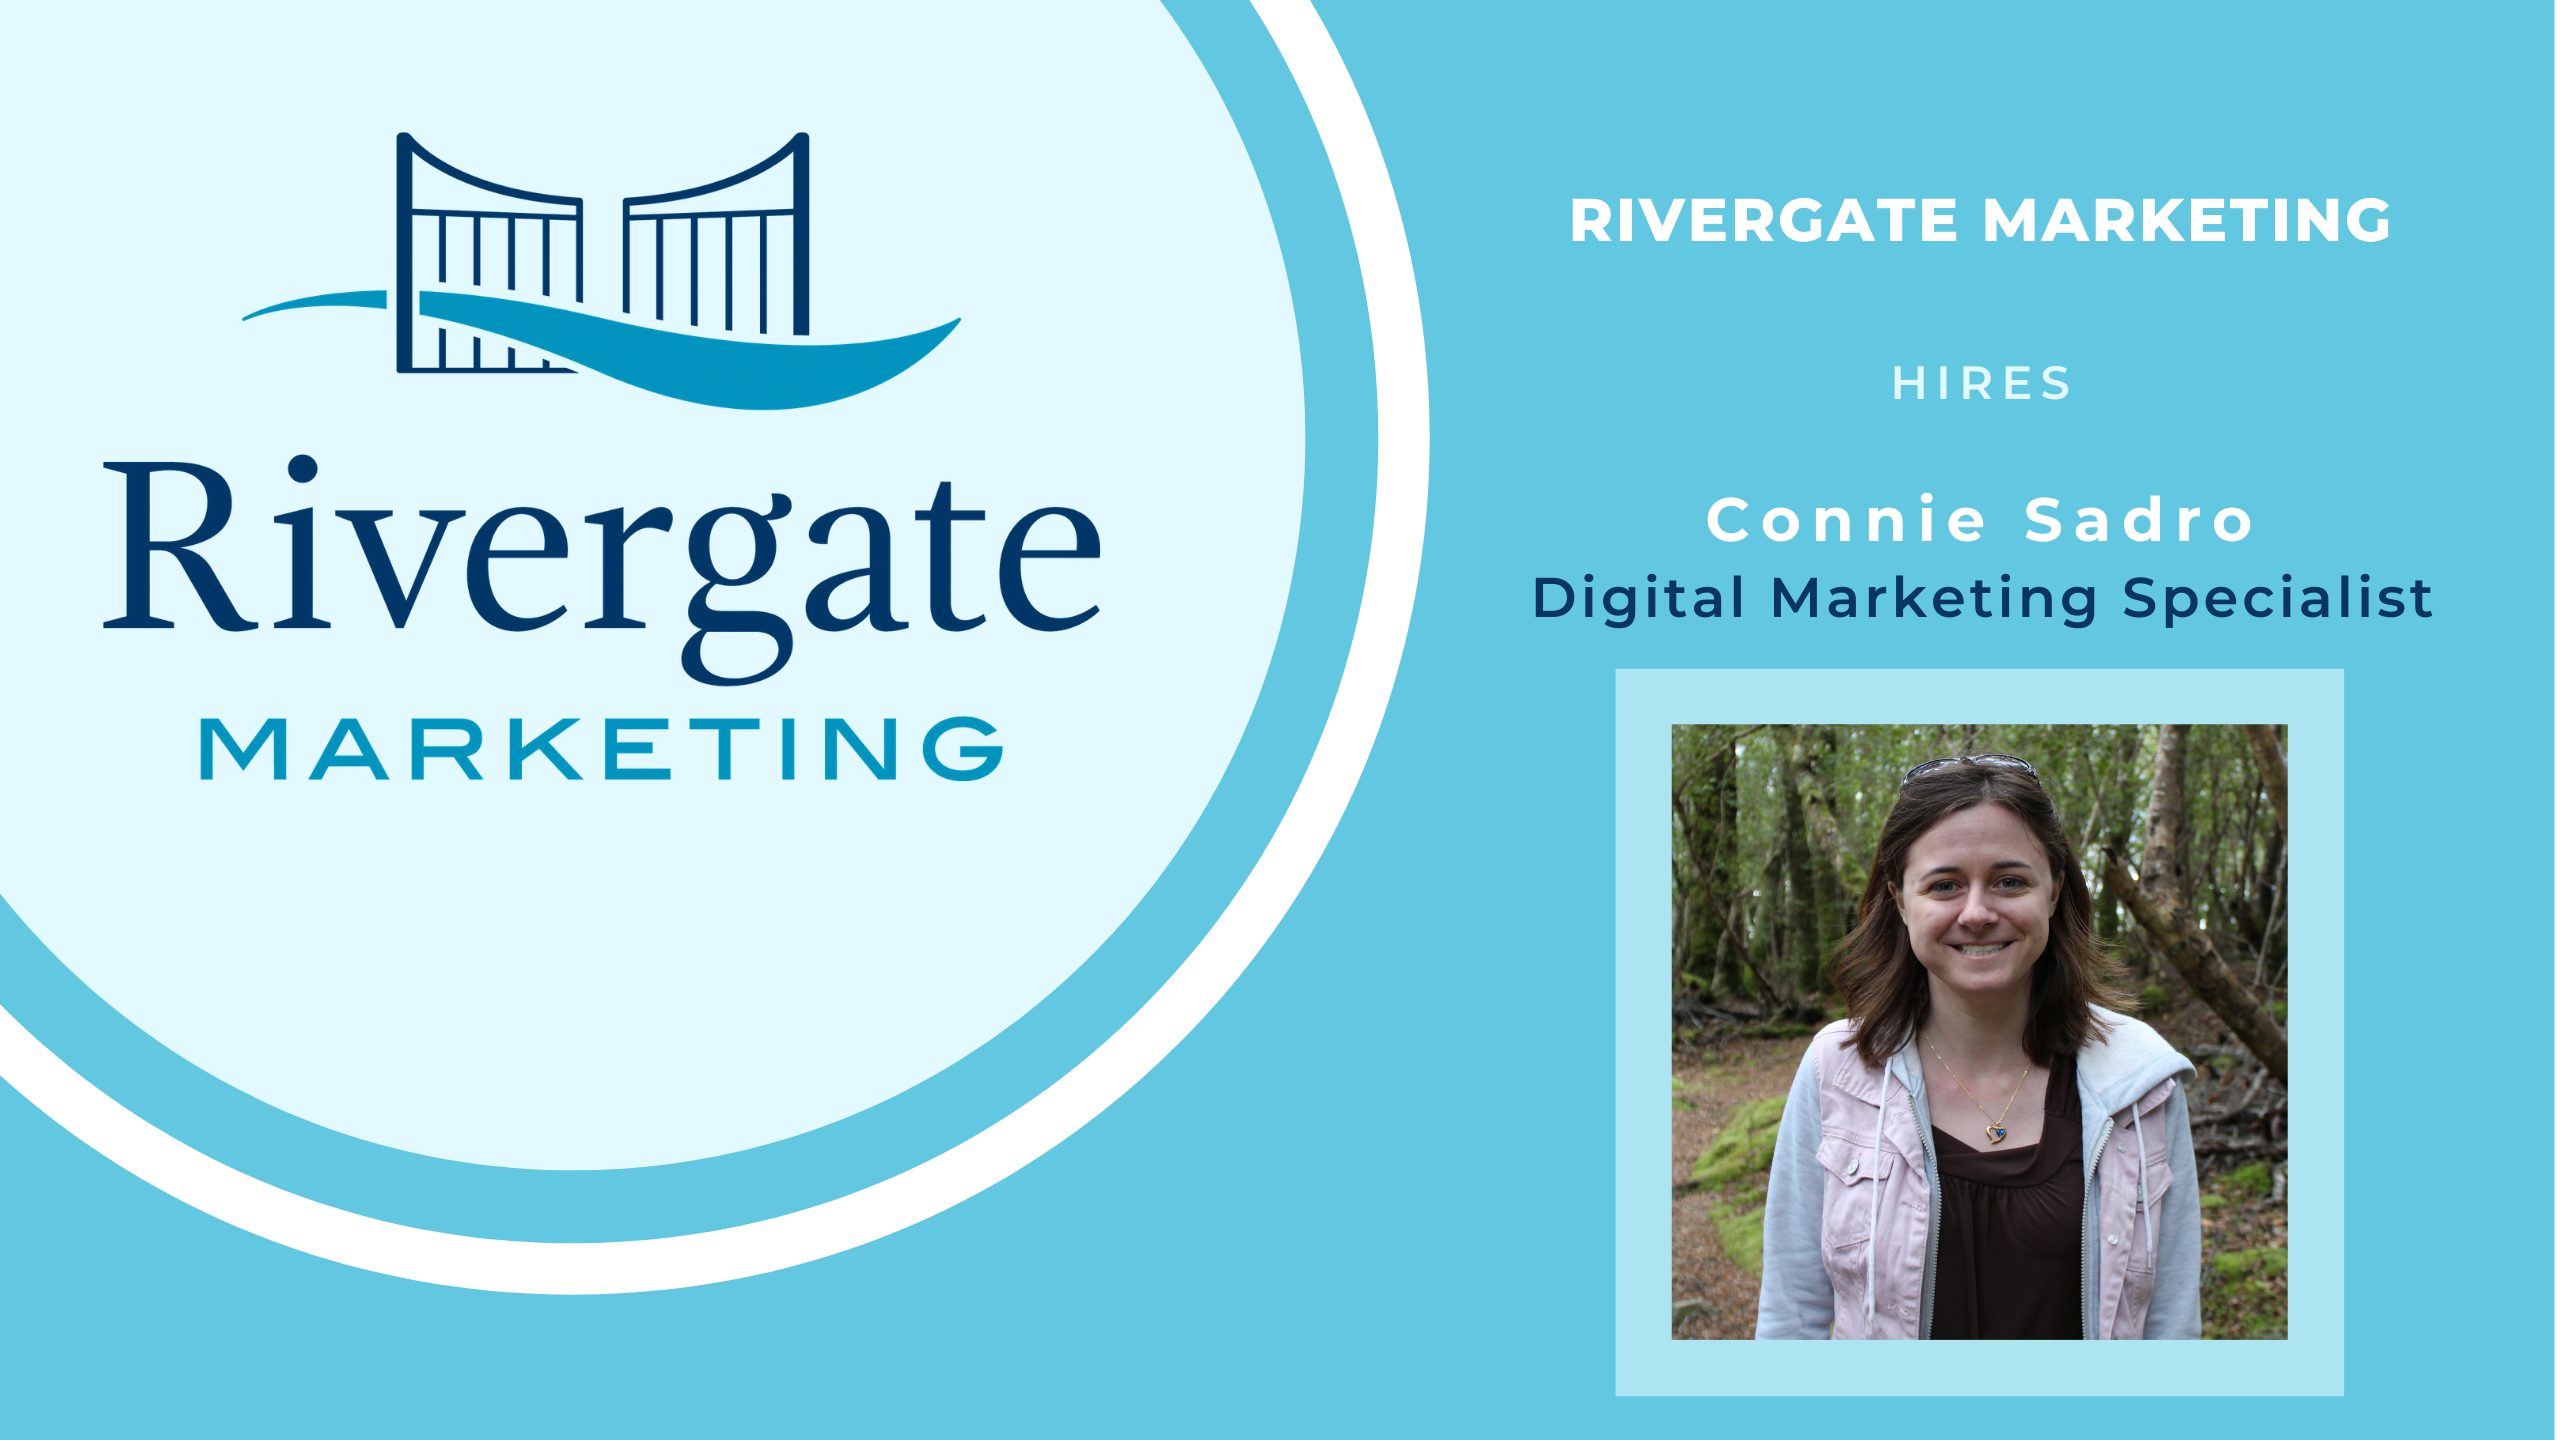 Rivergate Marketing hires Connie Sadro